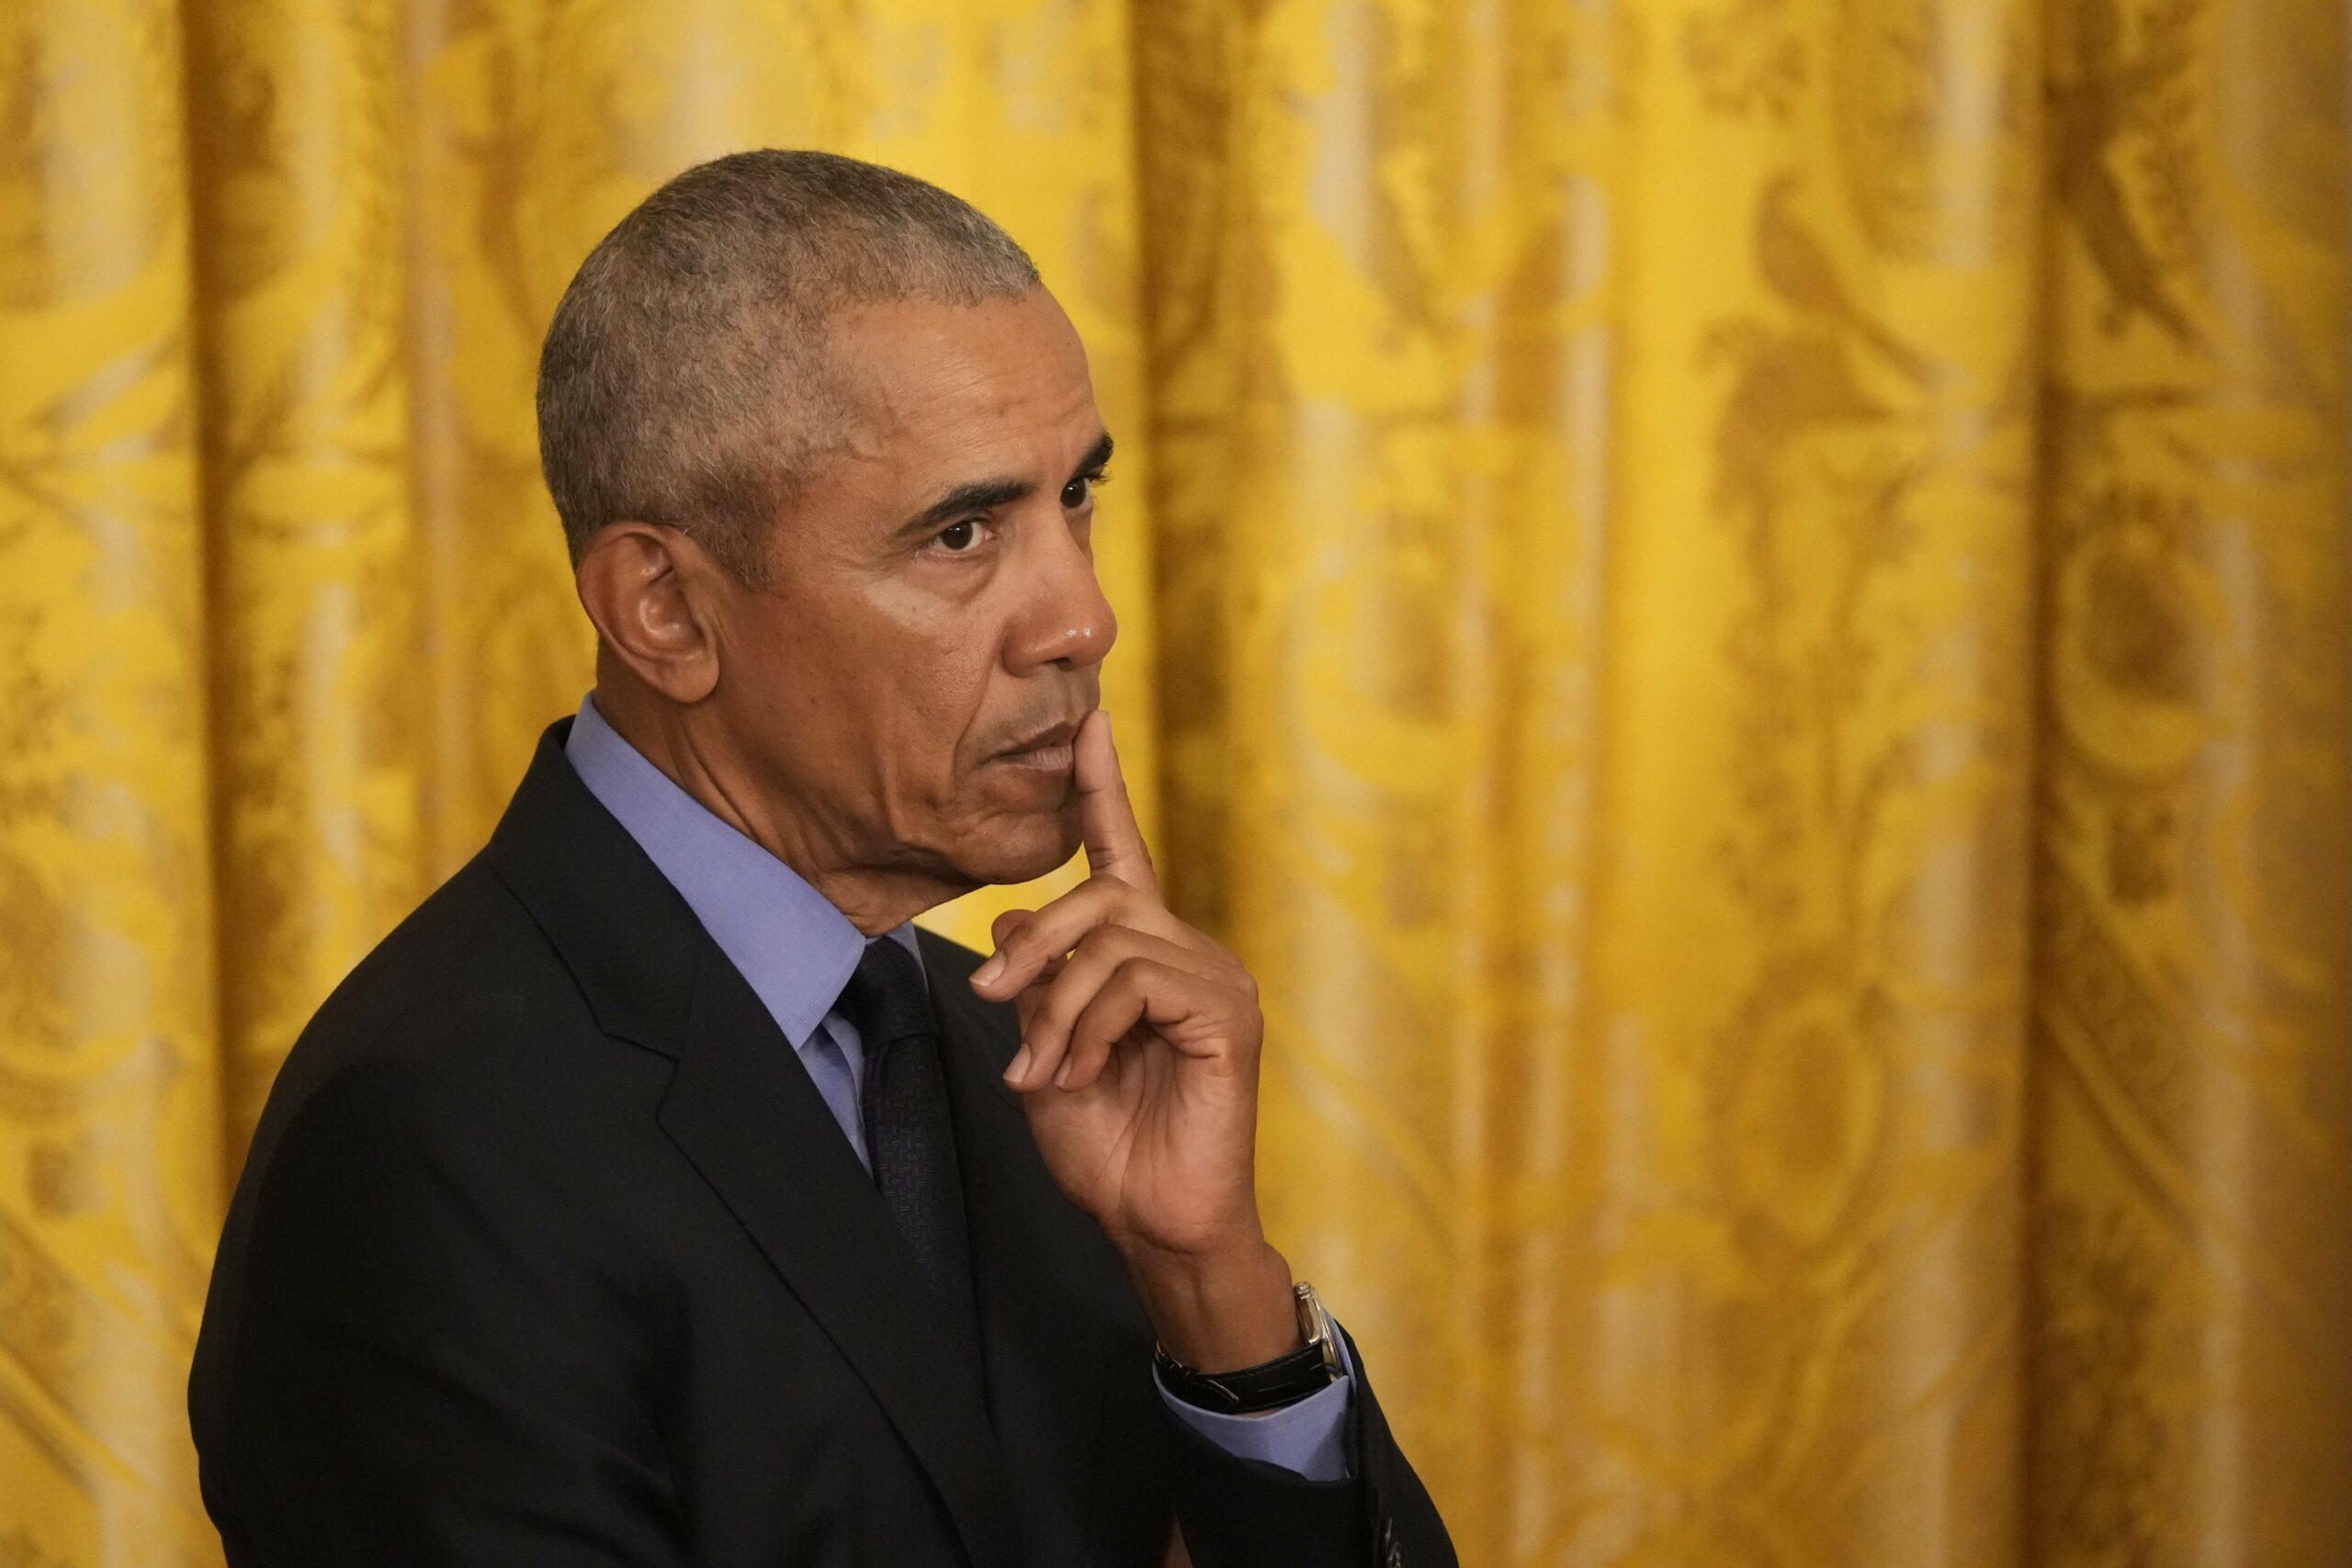 Barack Obama denounced SCOTUS for overturning Roe V. Wade